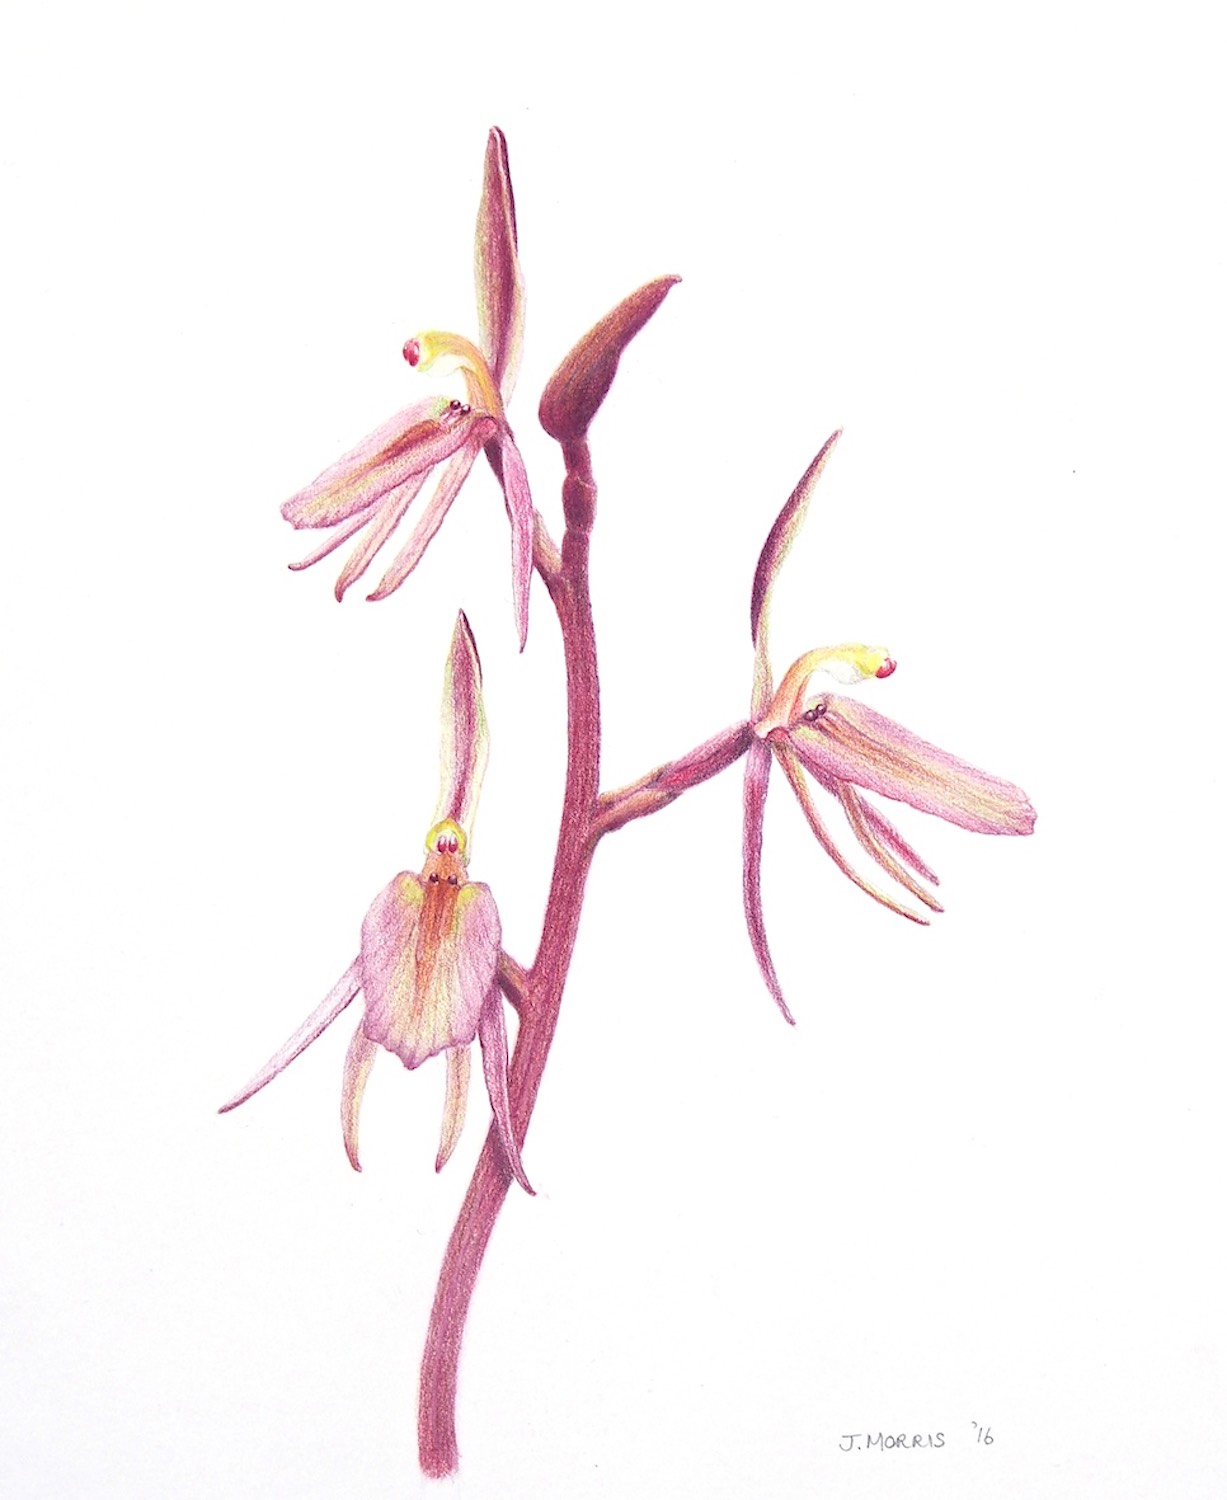 Small Gnat Orchid, Cyrtostylis reniformis (2016).